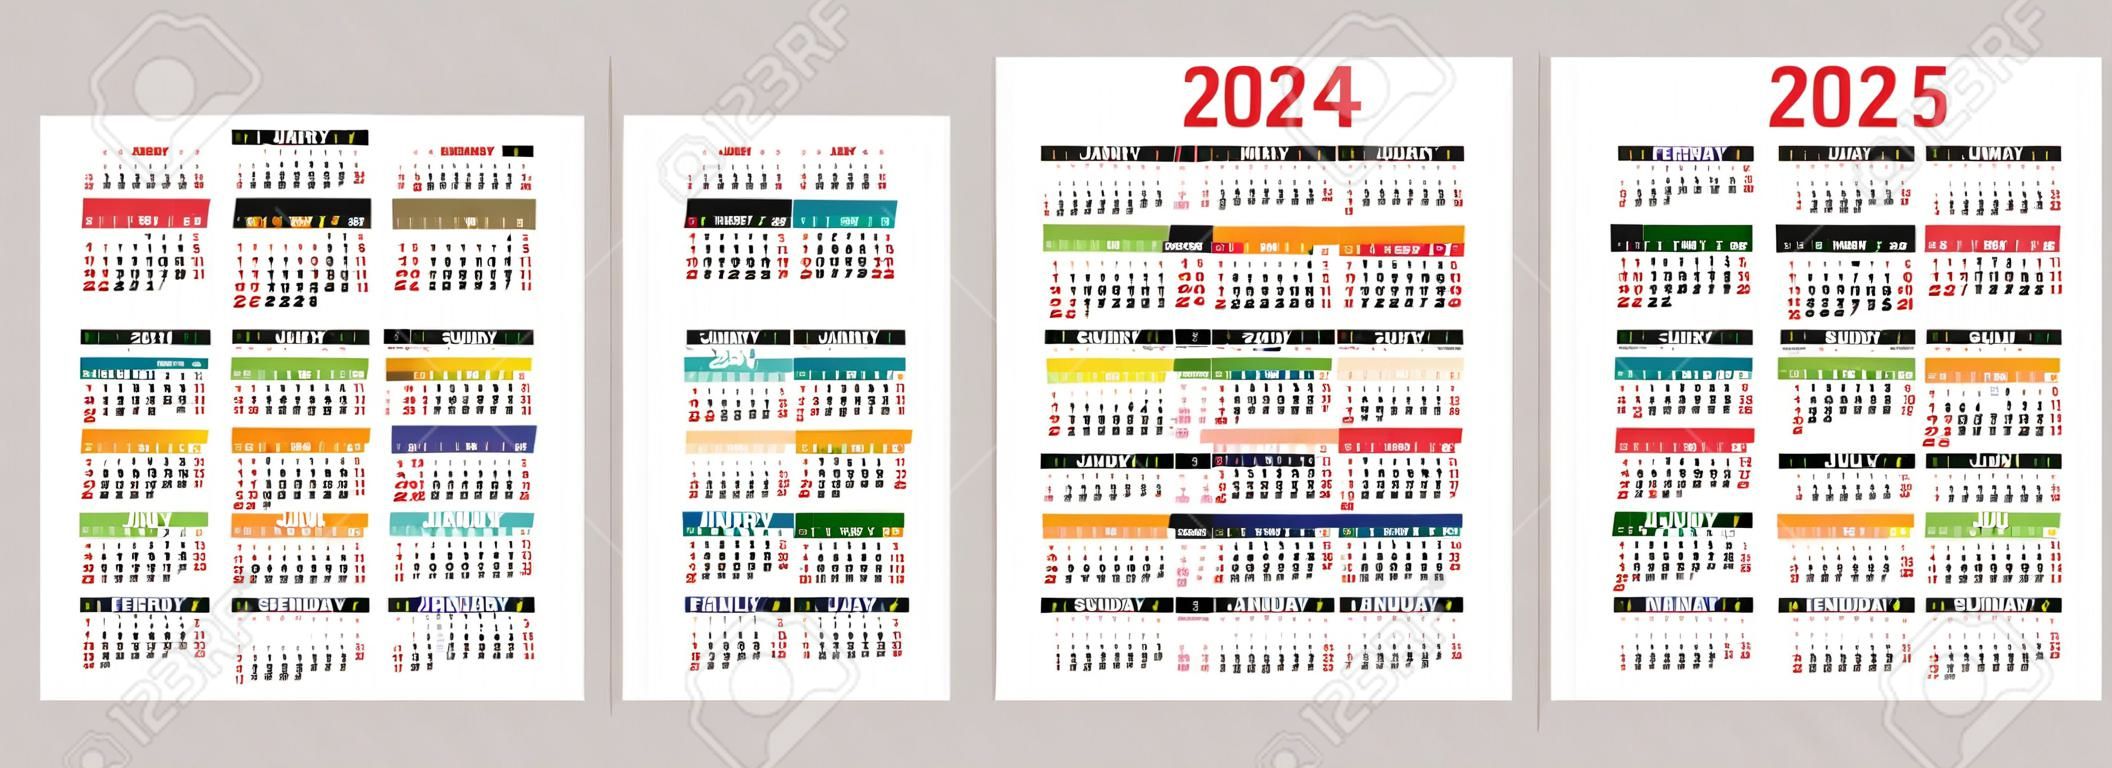 Farbiger Kalender 2023, 2024, 2025 und 2026. Farbvektor-Taschenkalender-Design. Woche beginnt am Sonntag. Januar, Februar, März, April, Mai, Juni, Juli, August, September, Oktober, November, Dezember.